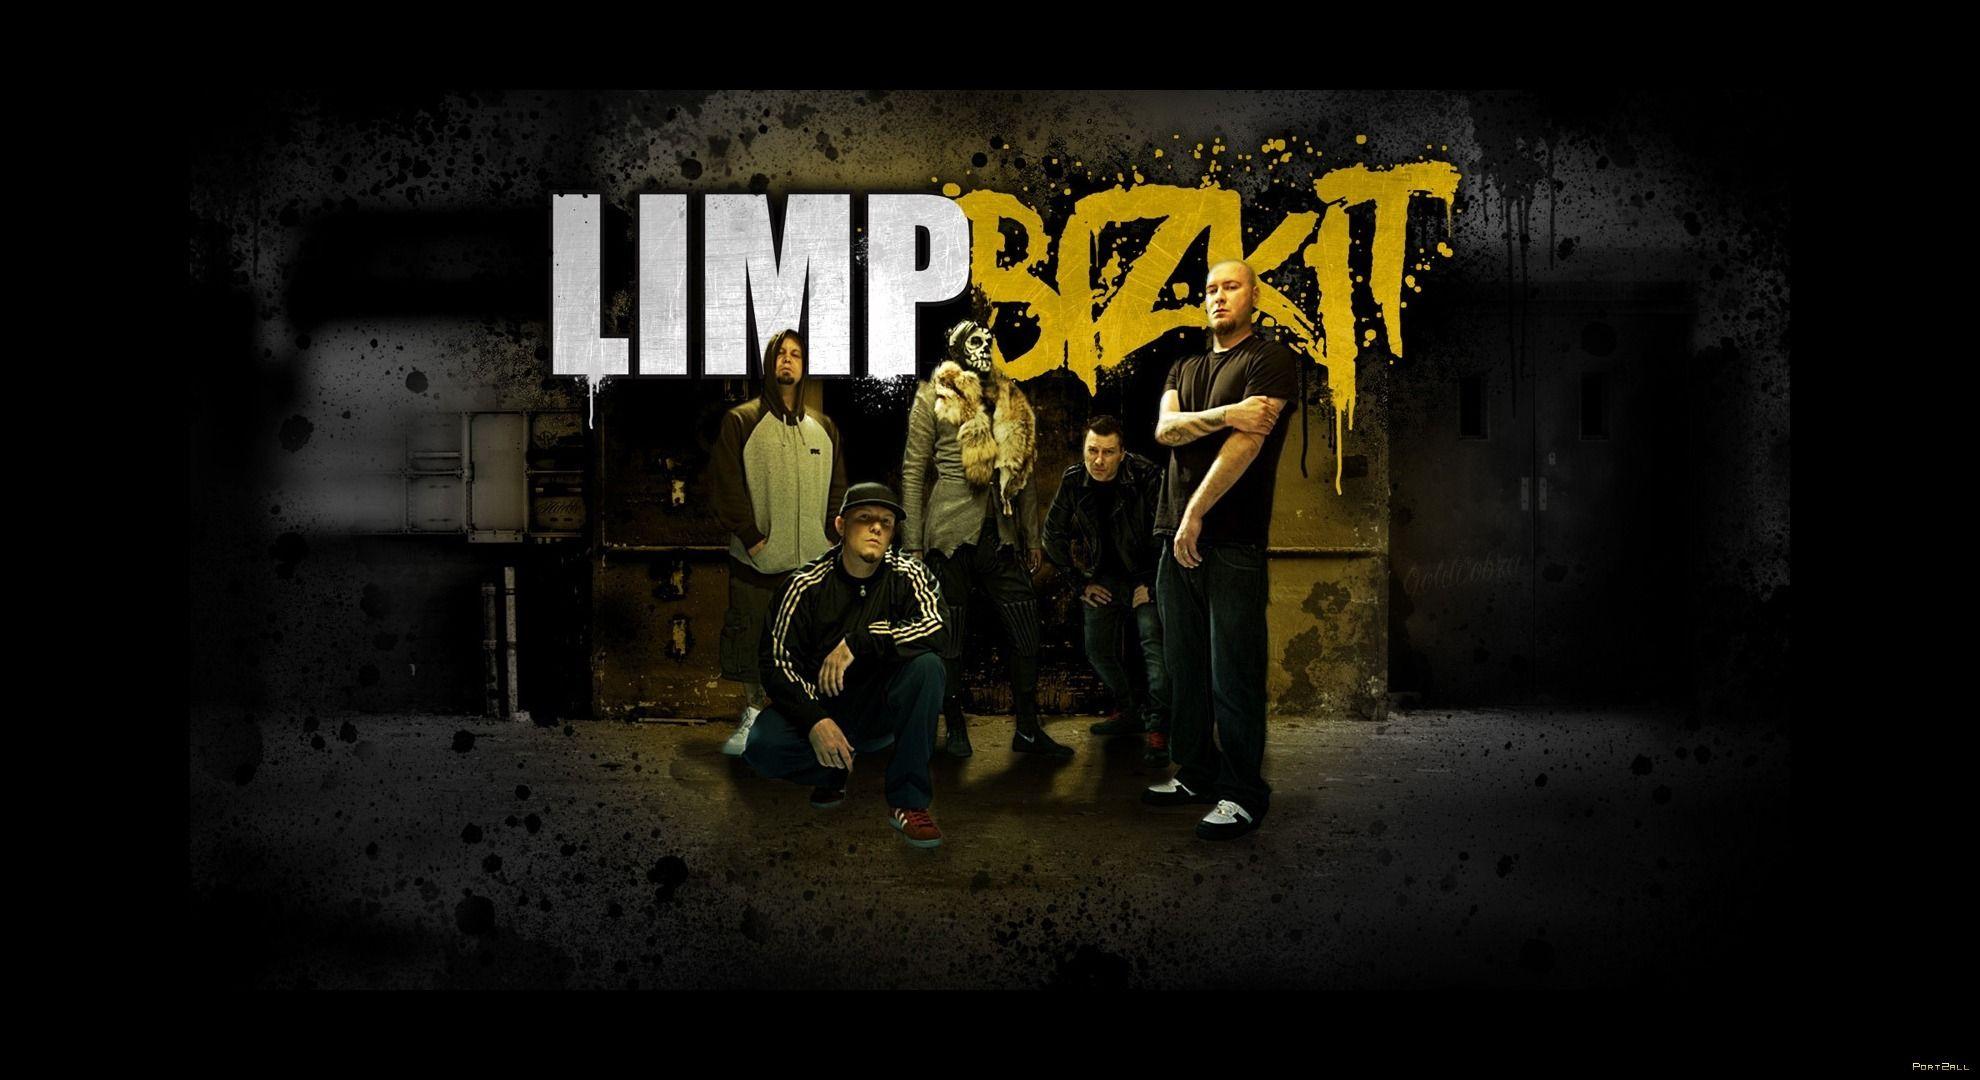 RZF32: Limp Bizkit Wallpaper, Limp Bizkit Picture in Best